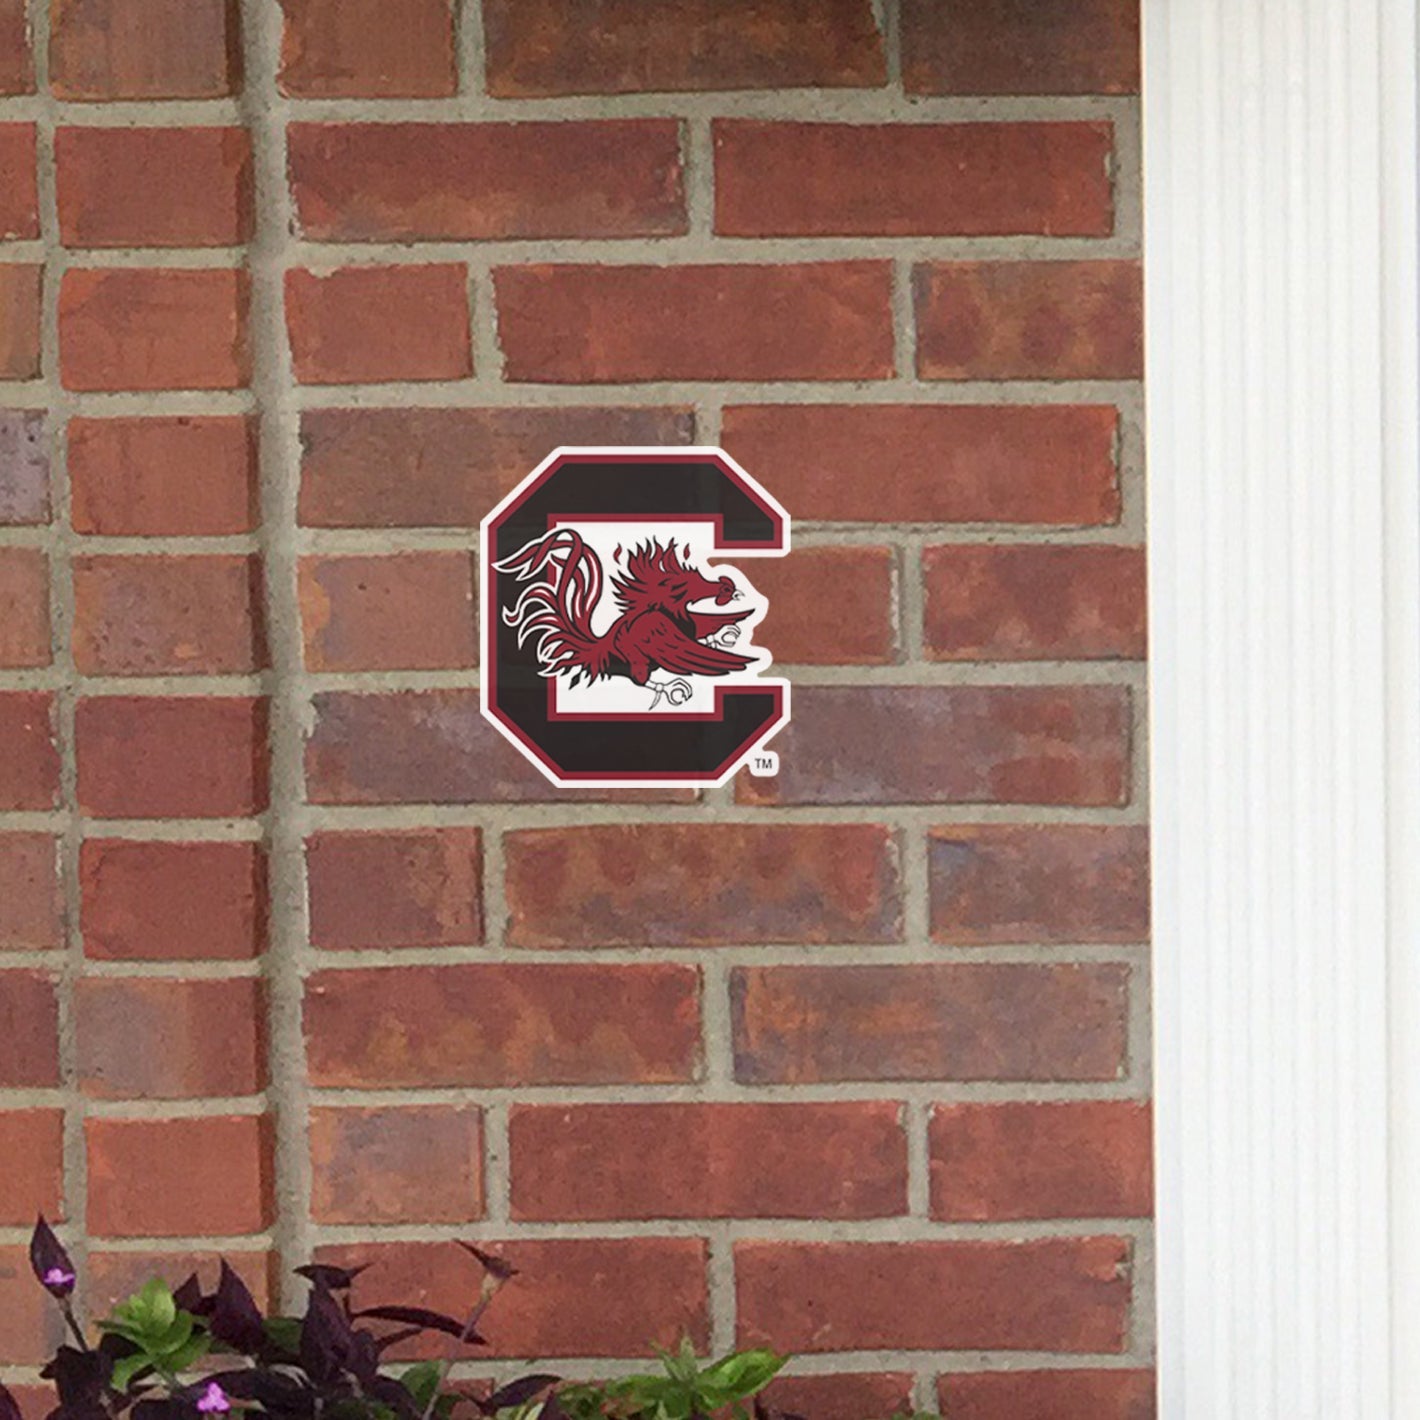 South Carolina Gamecocks: Outdoor Logo - Officially Licensed NCAA Outdoor Graphic